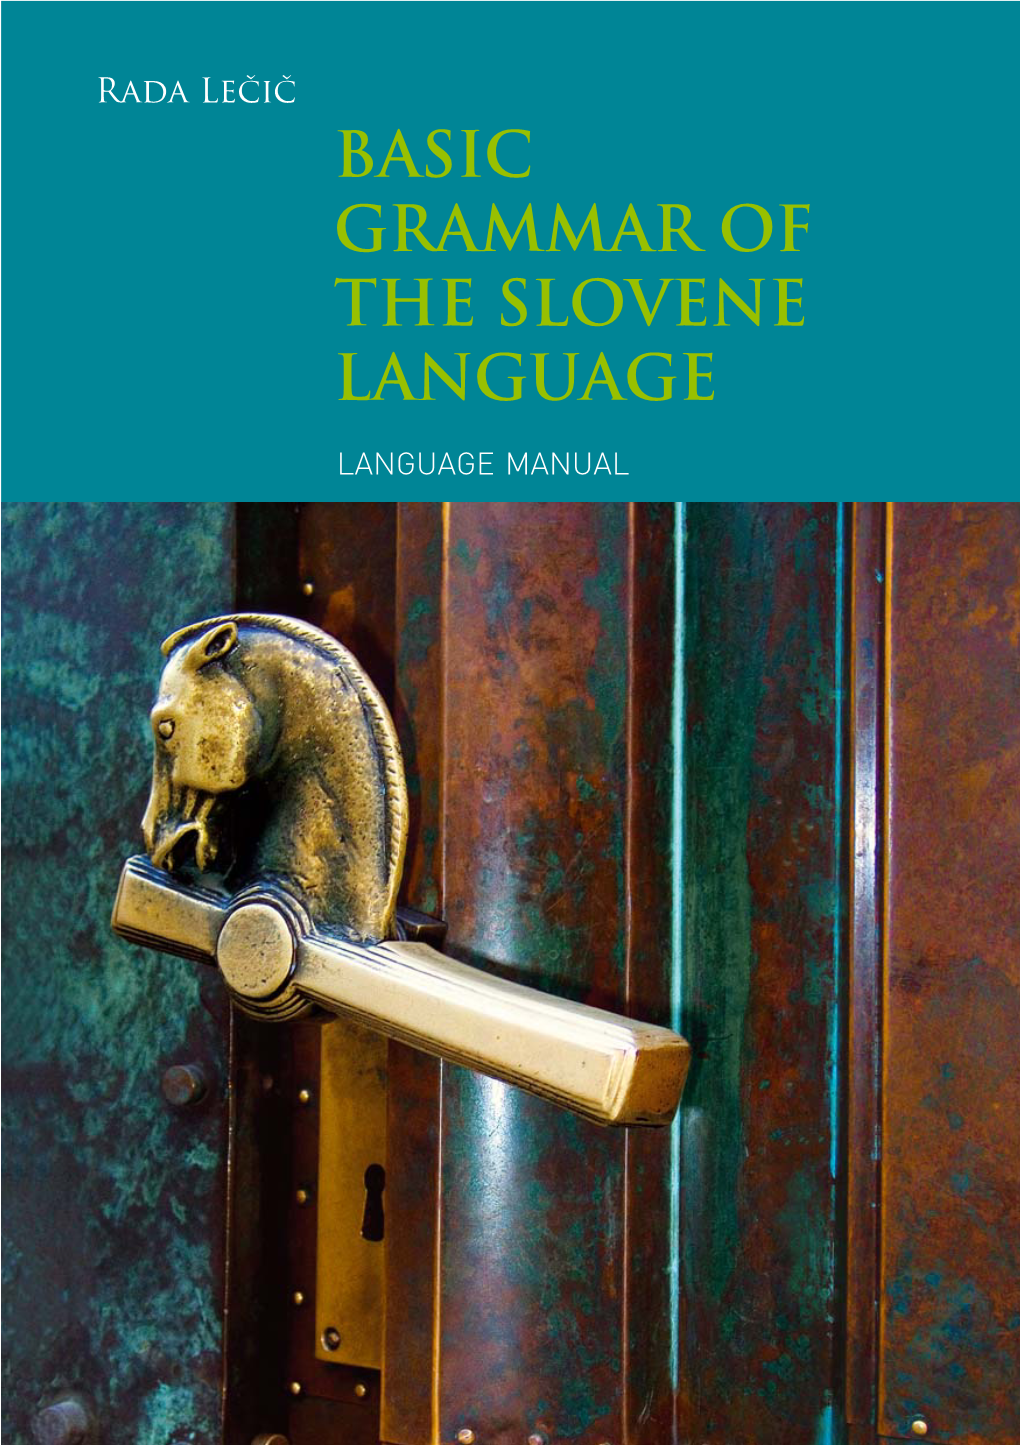 Basic Grammar of the Slovene Language